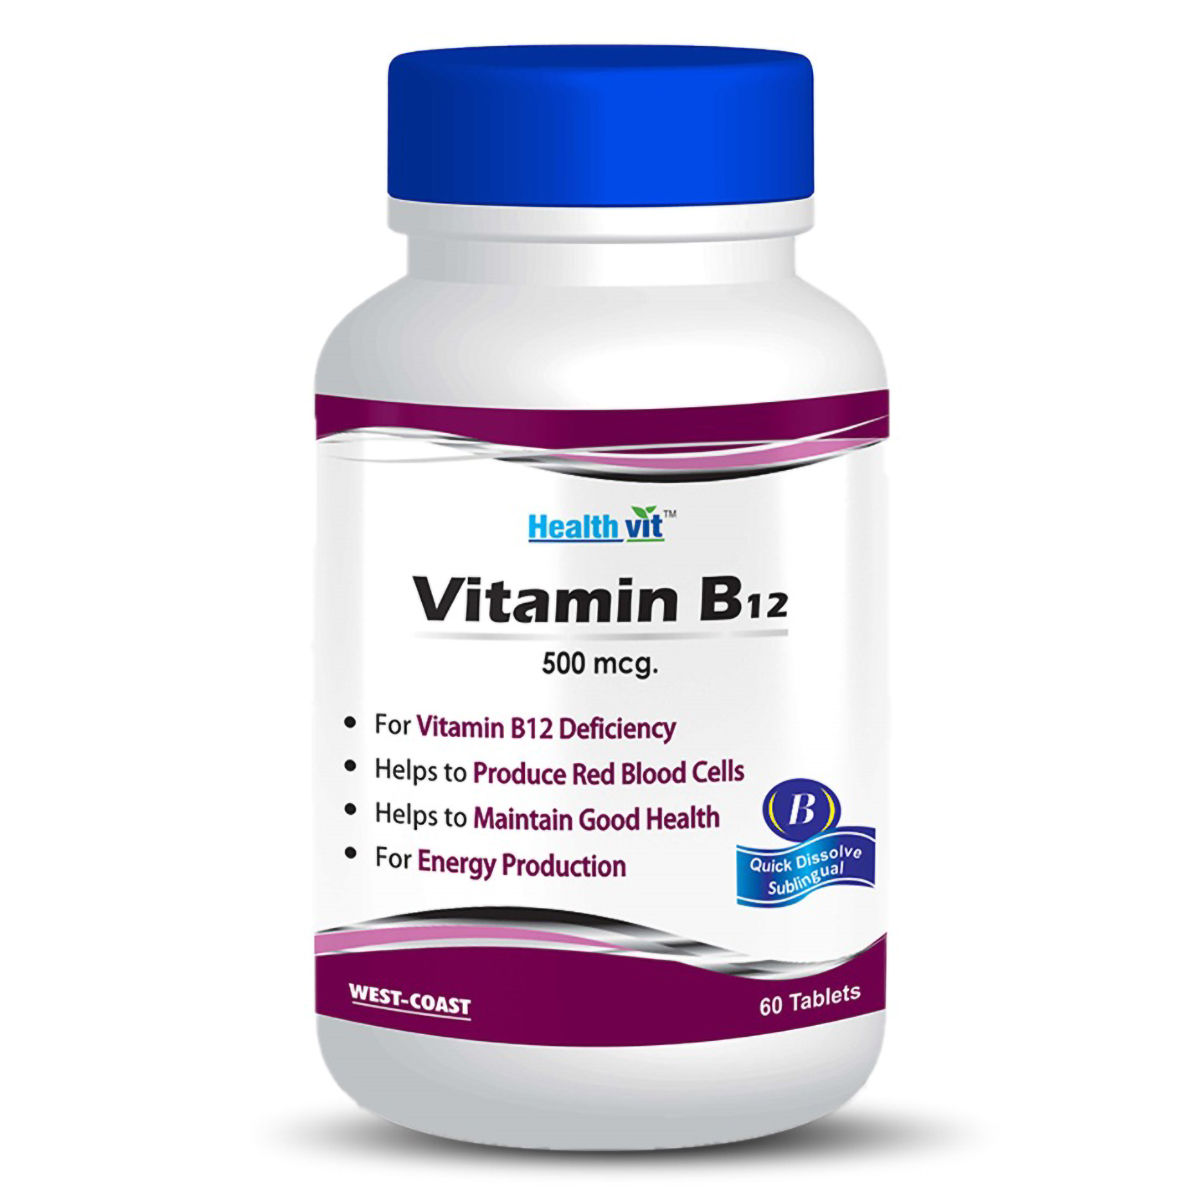 Buy Healthvit Vitamin B12 500 mcg, 60 Tablets Online